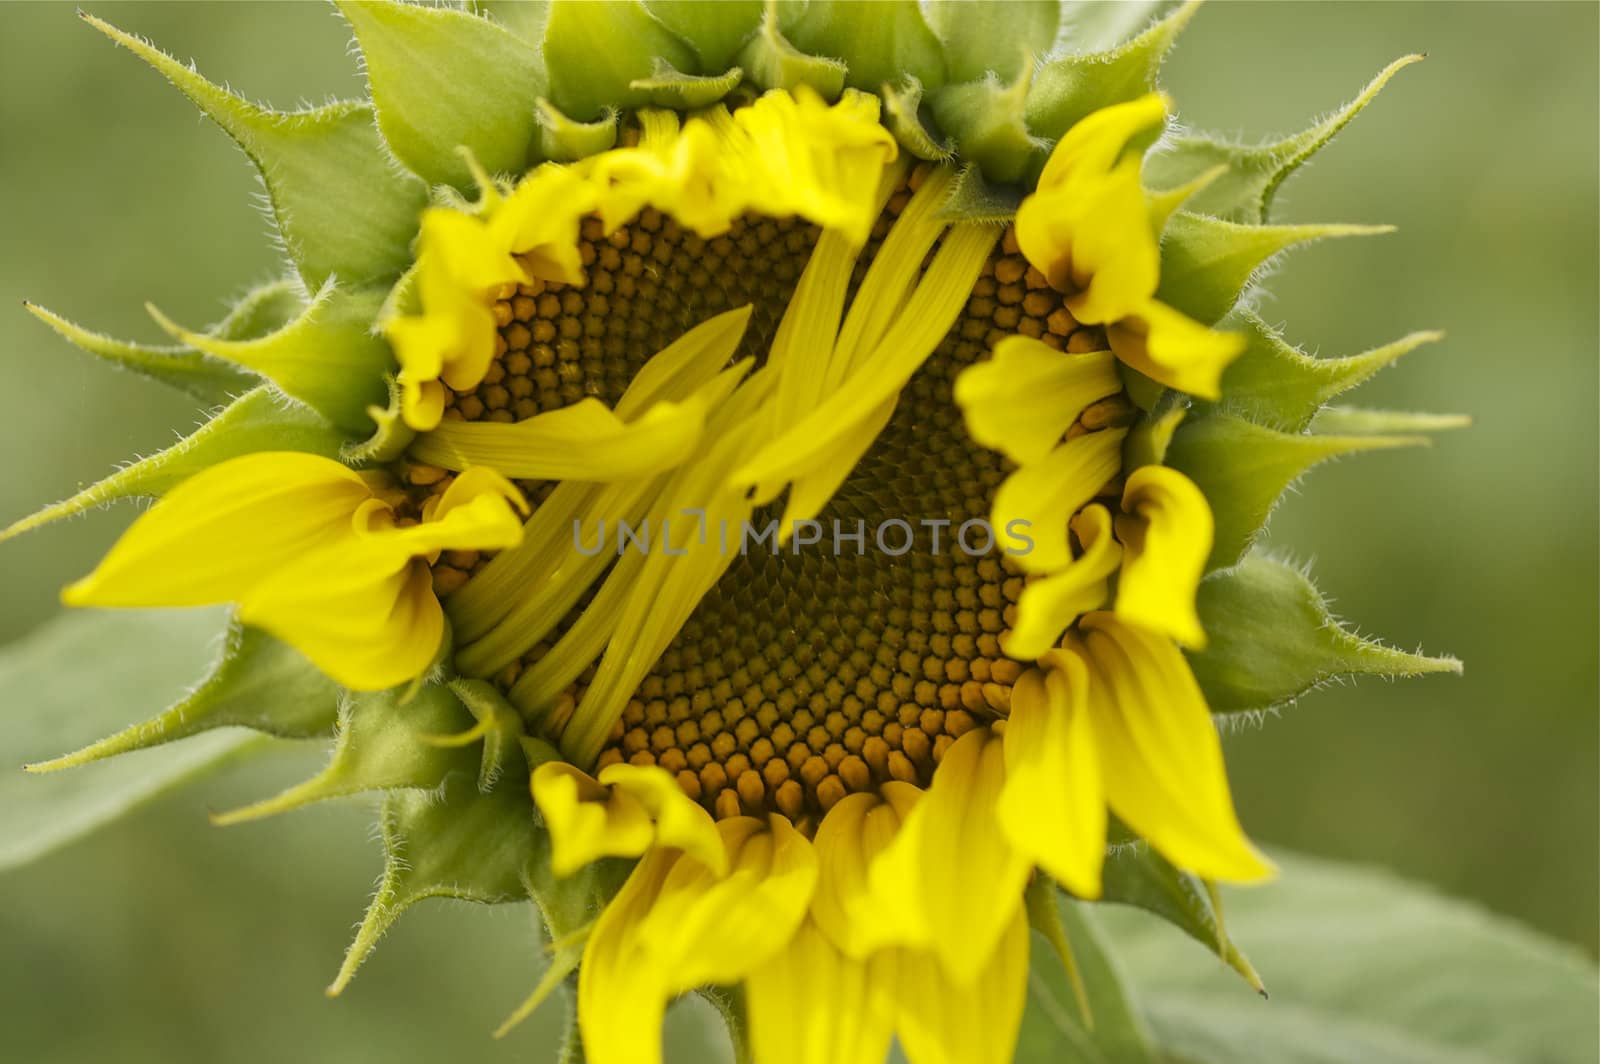 Shy sunflower by PrincessToula